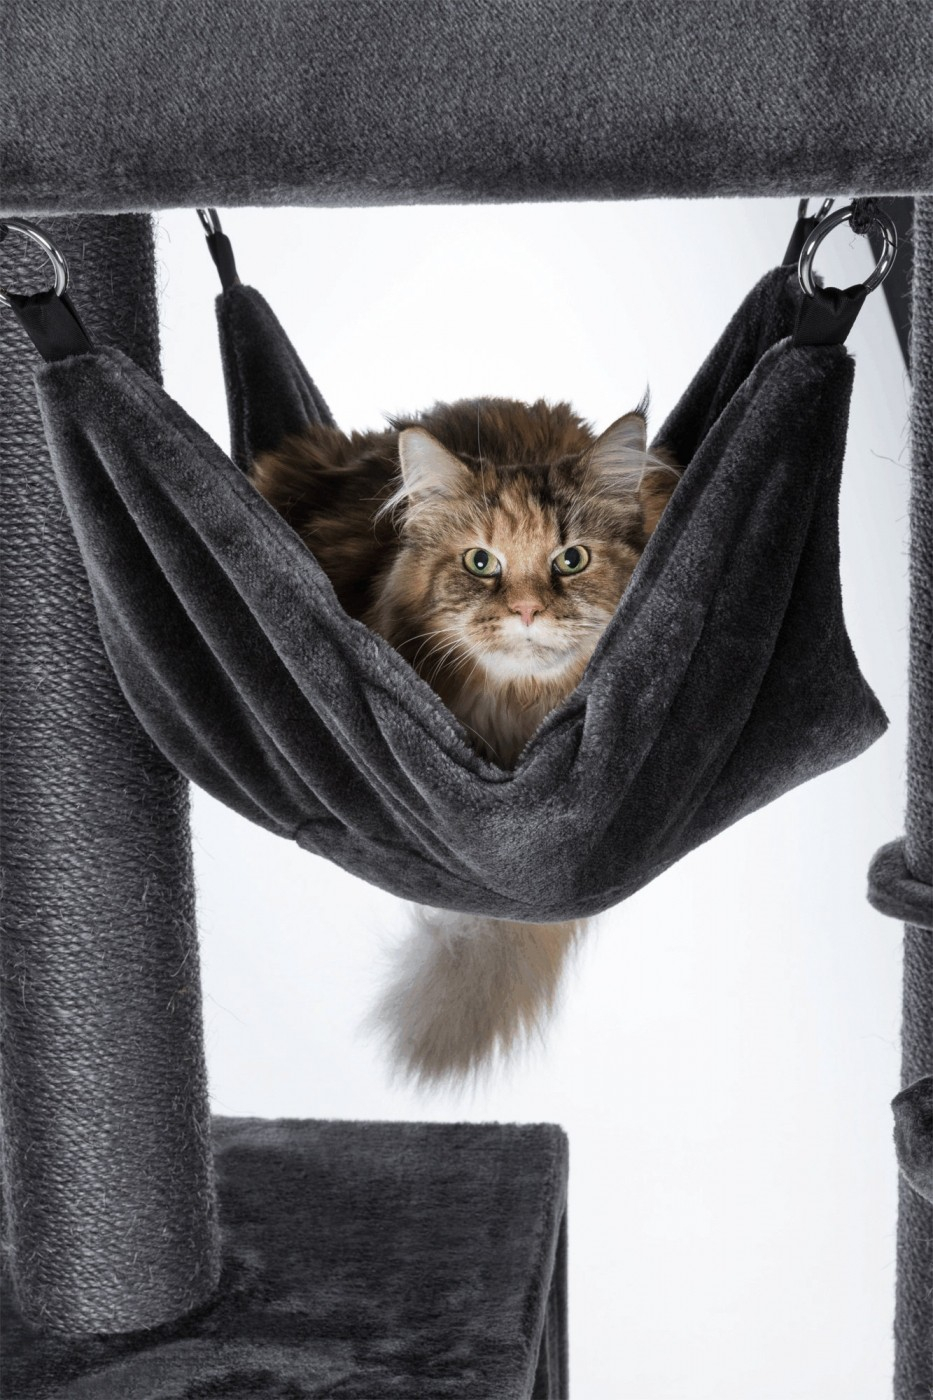 Albero per gatto XXL Trixie Amadeus - H163 cm - grigio